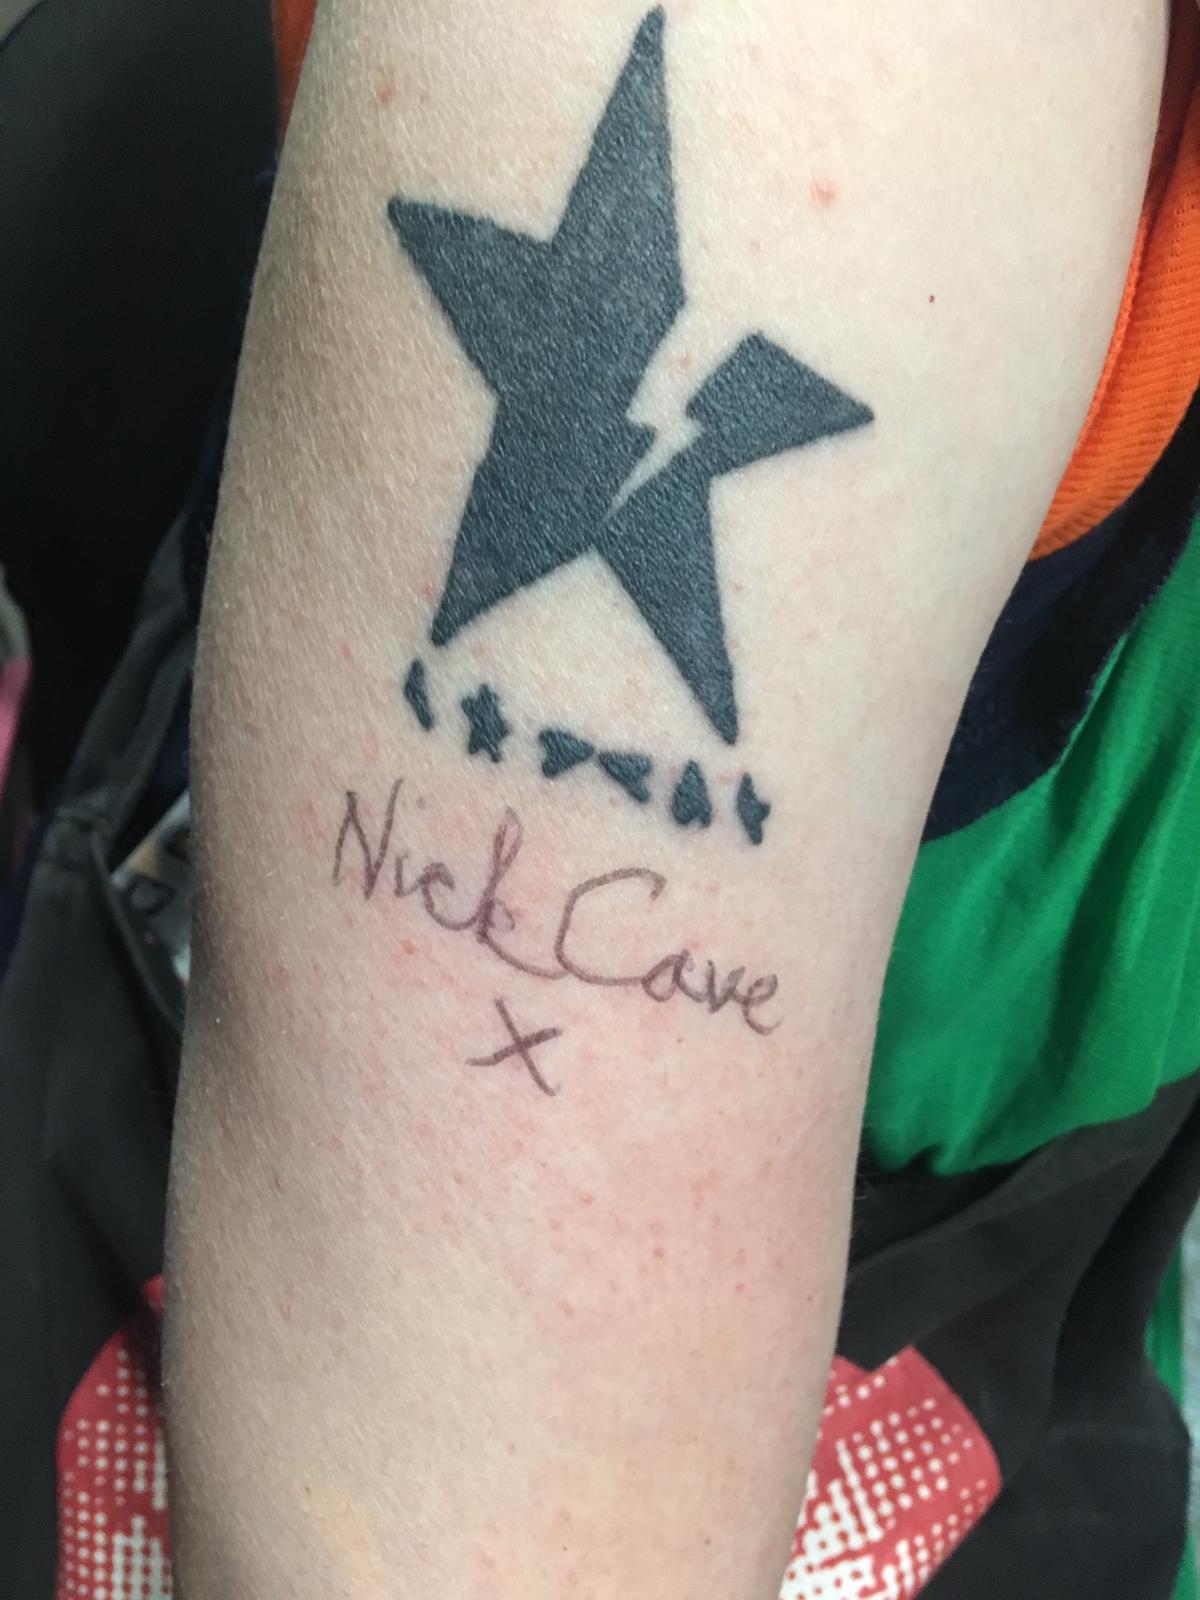 Latest Nick cave Tattoos  Find Nick cave Tattoos